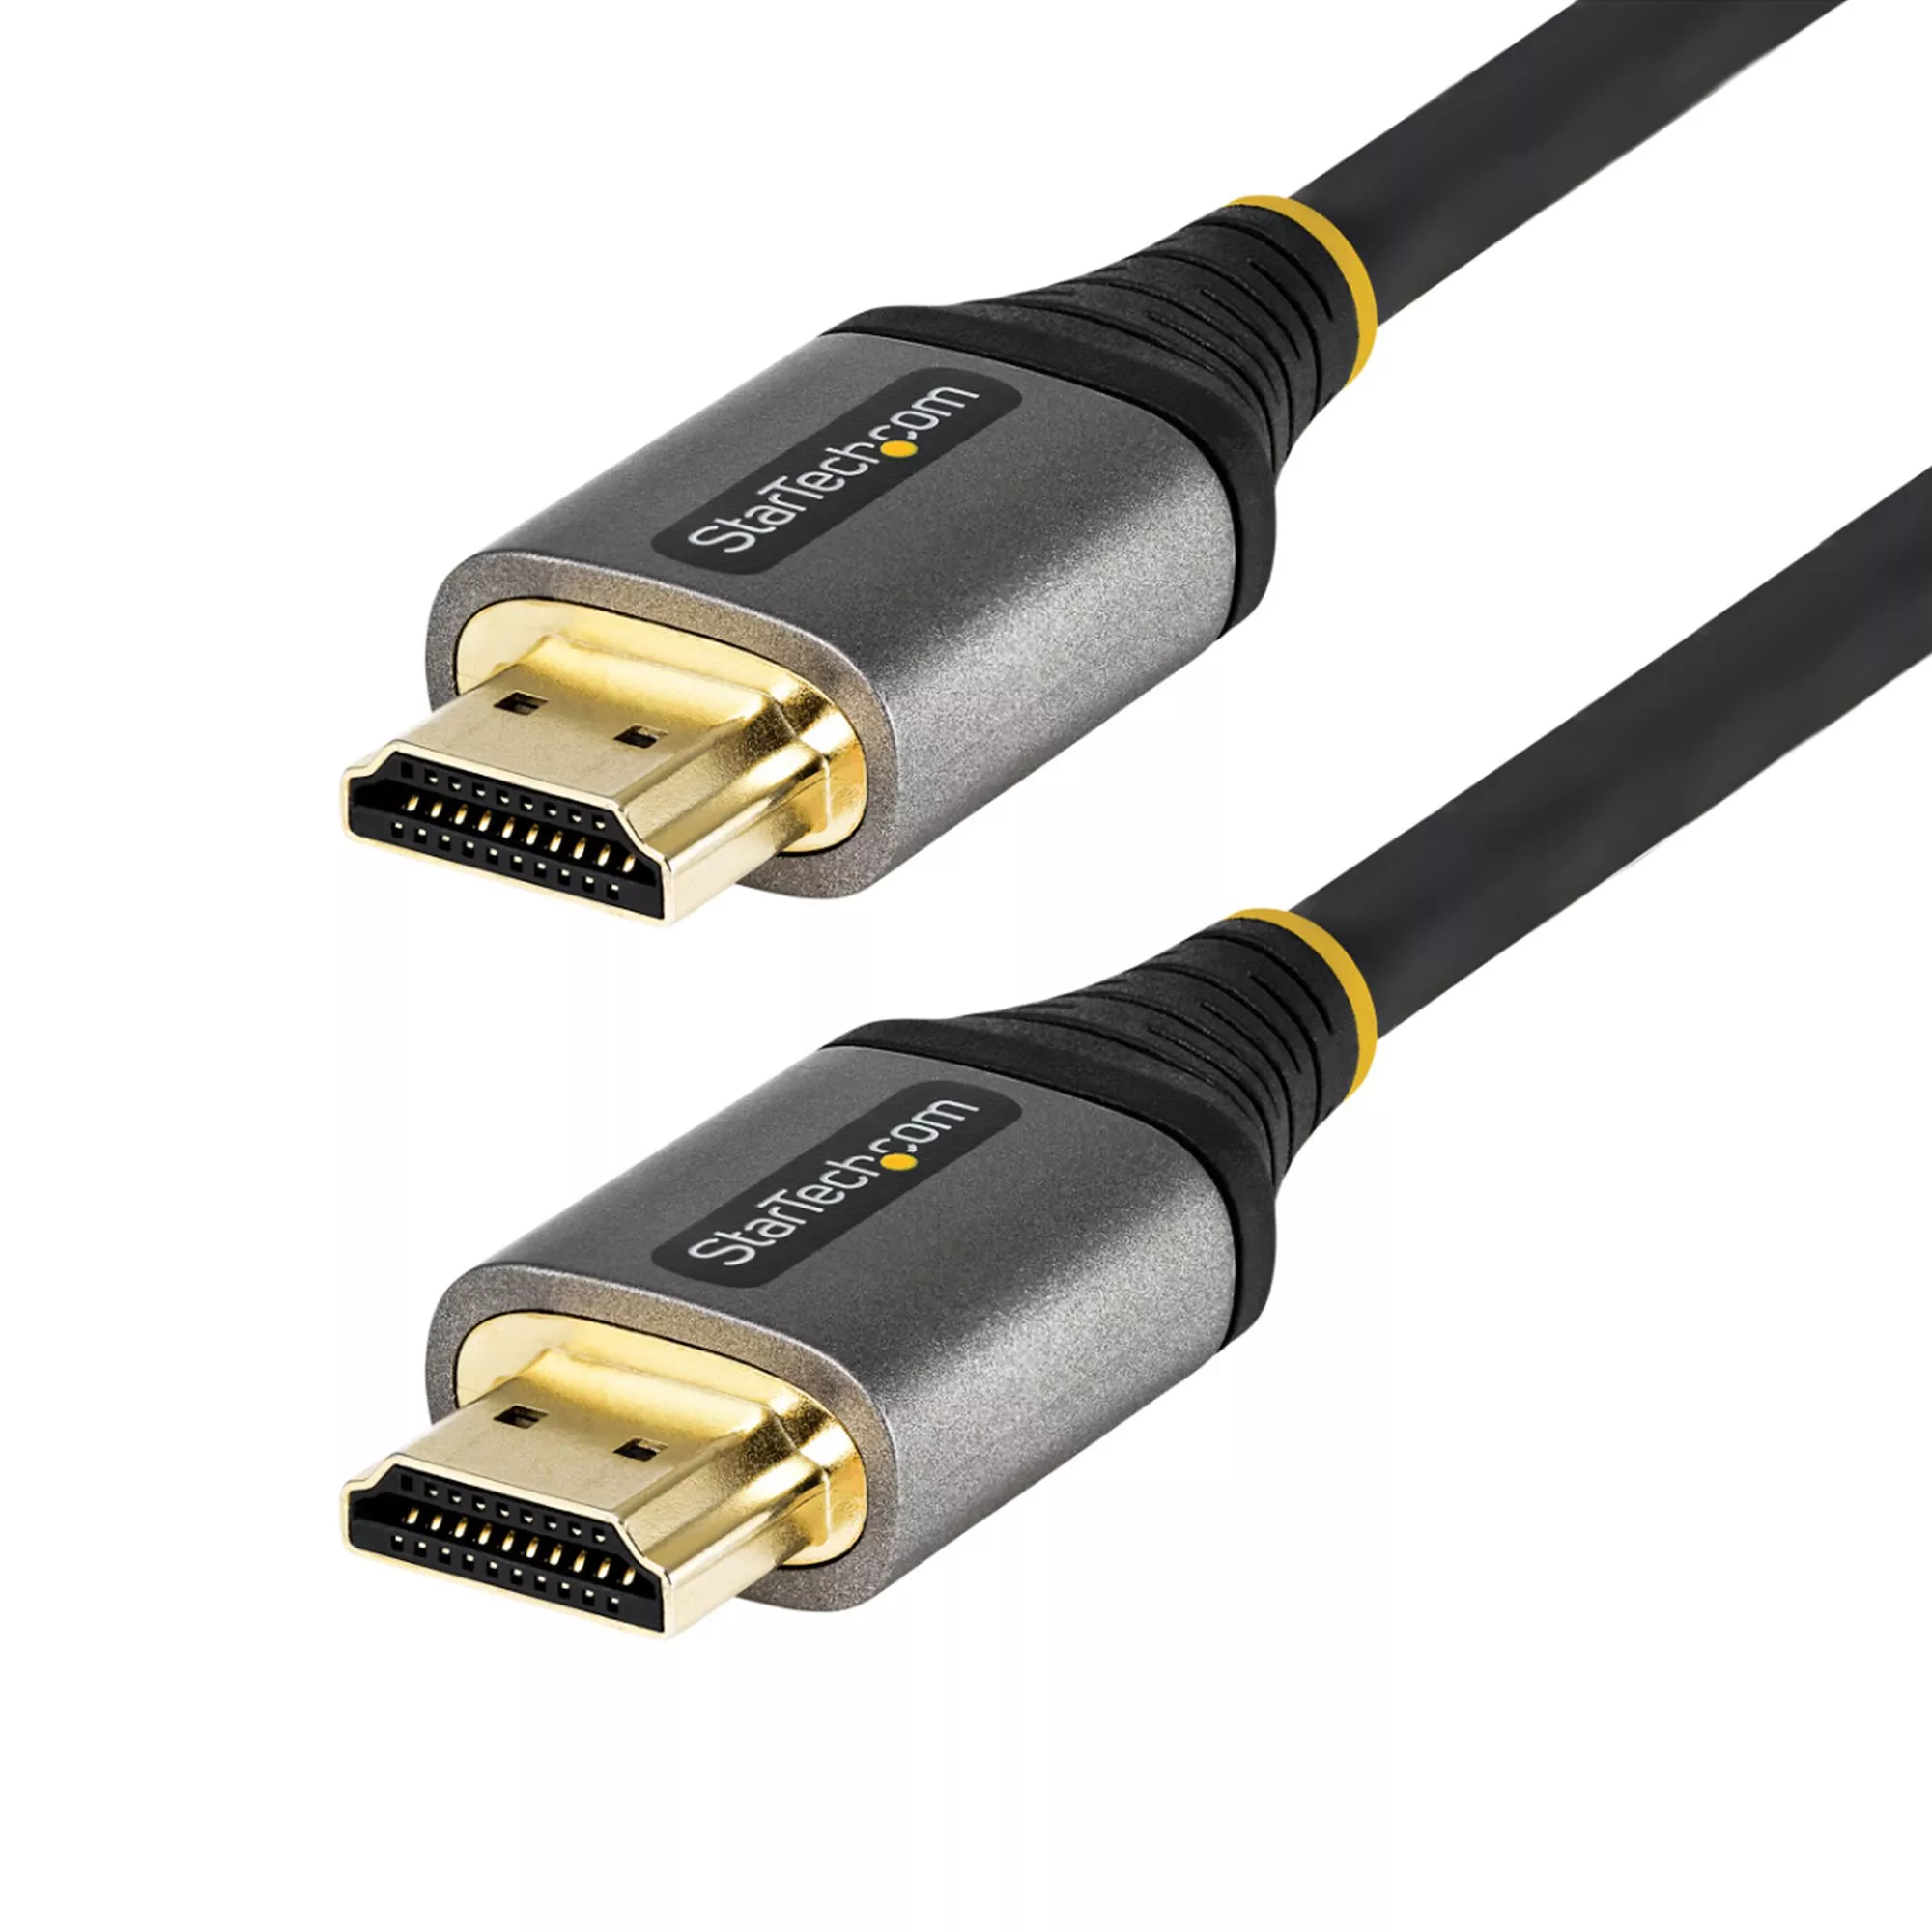 Revendeur officiel Câble HDMI StarTech.com Câble HDMI 2.1 8k de 50cm - Cordon HDMI